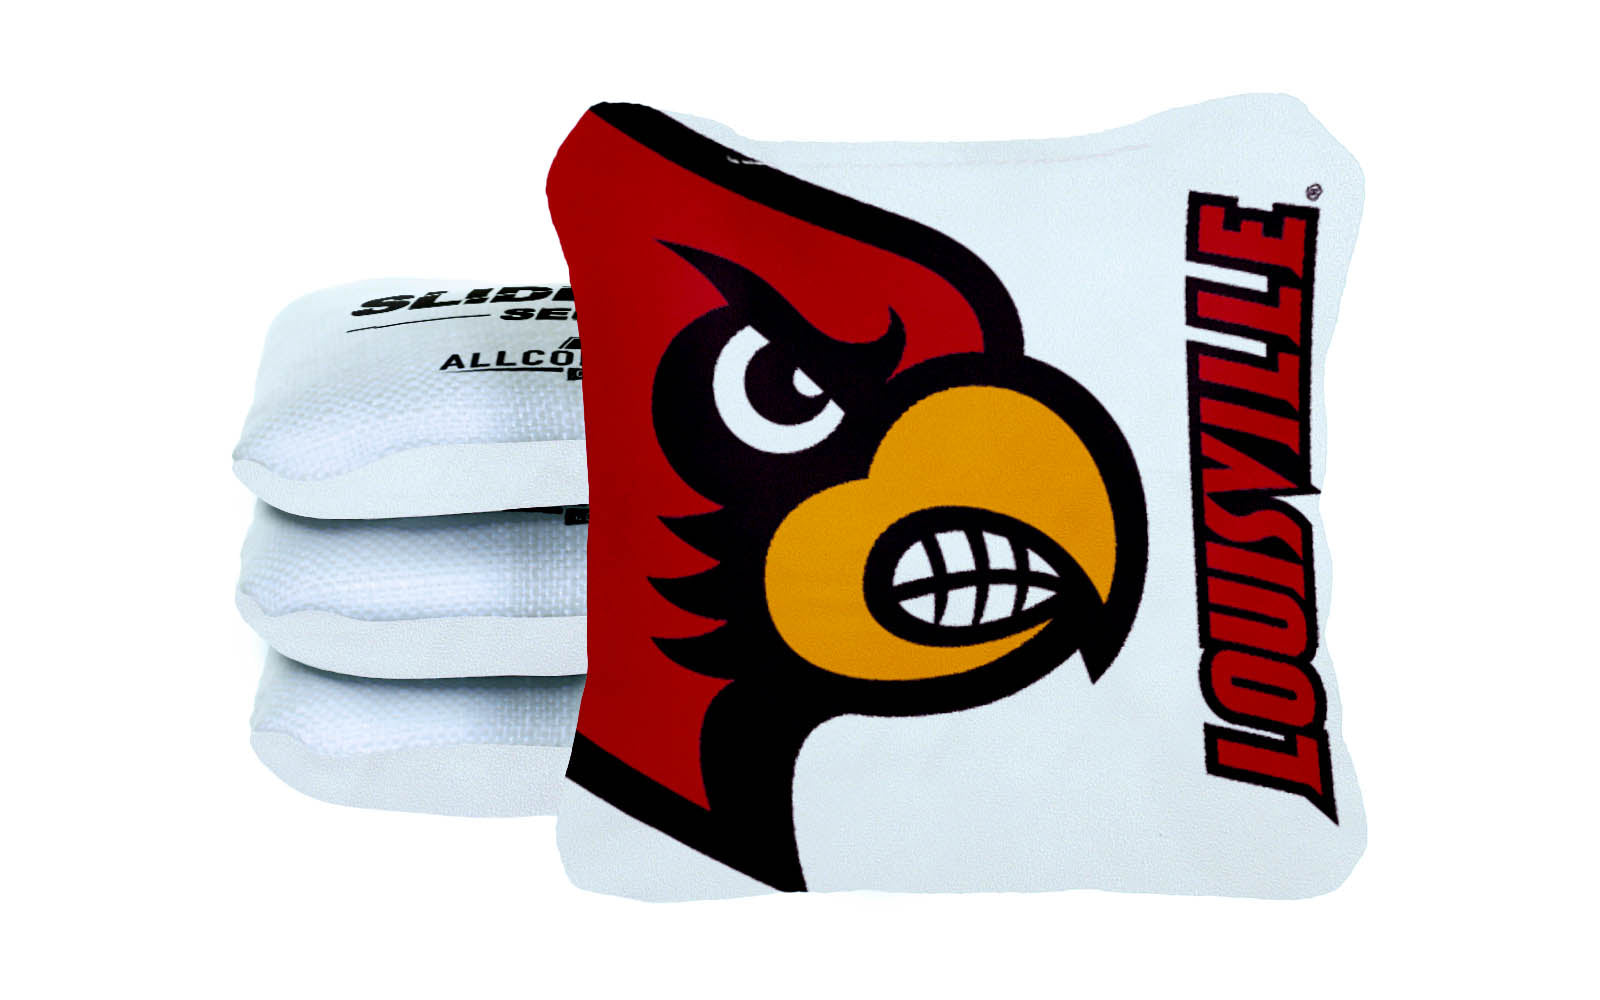 Officially Licensed Collegiate Cornhole Bags - Slide Rite - Set of 4 - University of Louisville